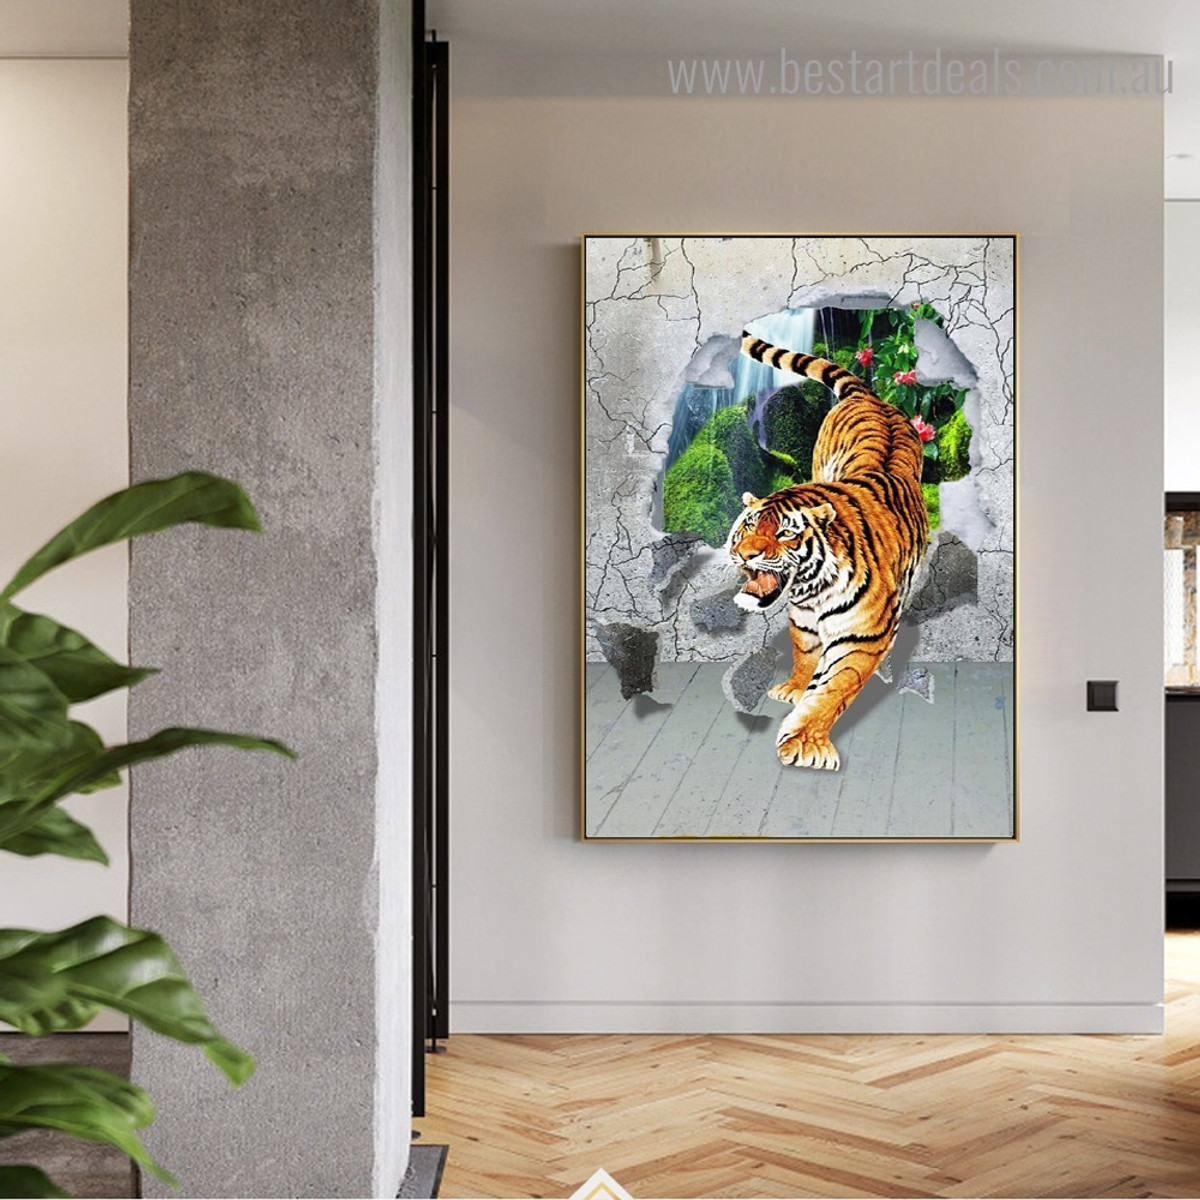 Tiger Broken Wall Animal Kids Modern Framed Artwork Image Canvas Print for Room Wall Tracery